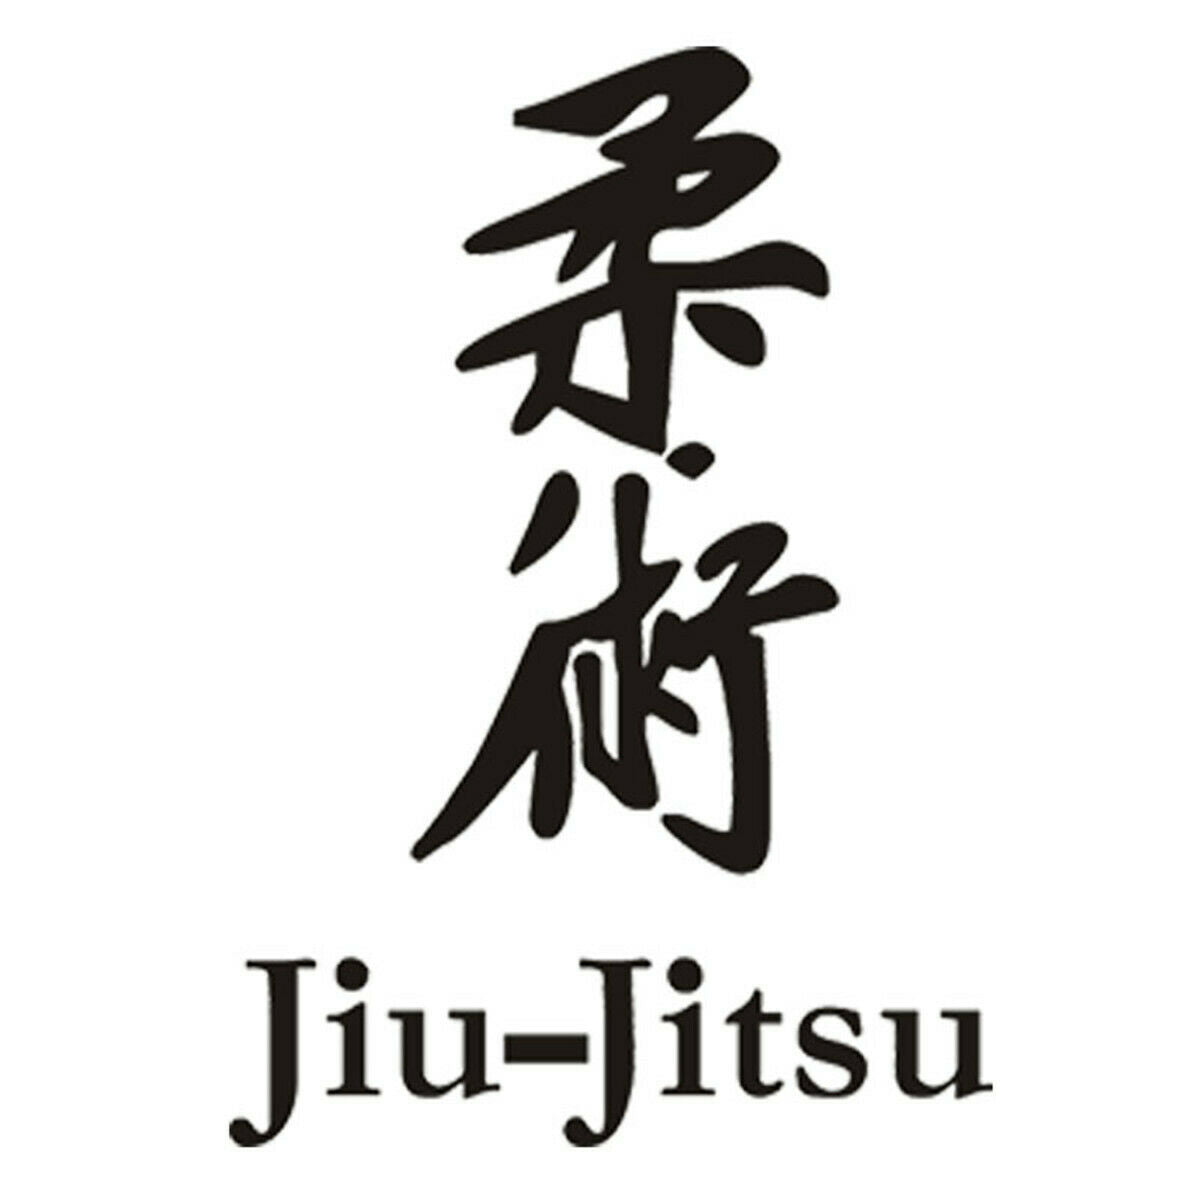 JIU JITSU BJJ MMA UFC JDM CUTE FUNNY Wall Sticker Car Window Motorcycle Decal